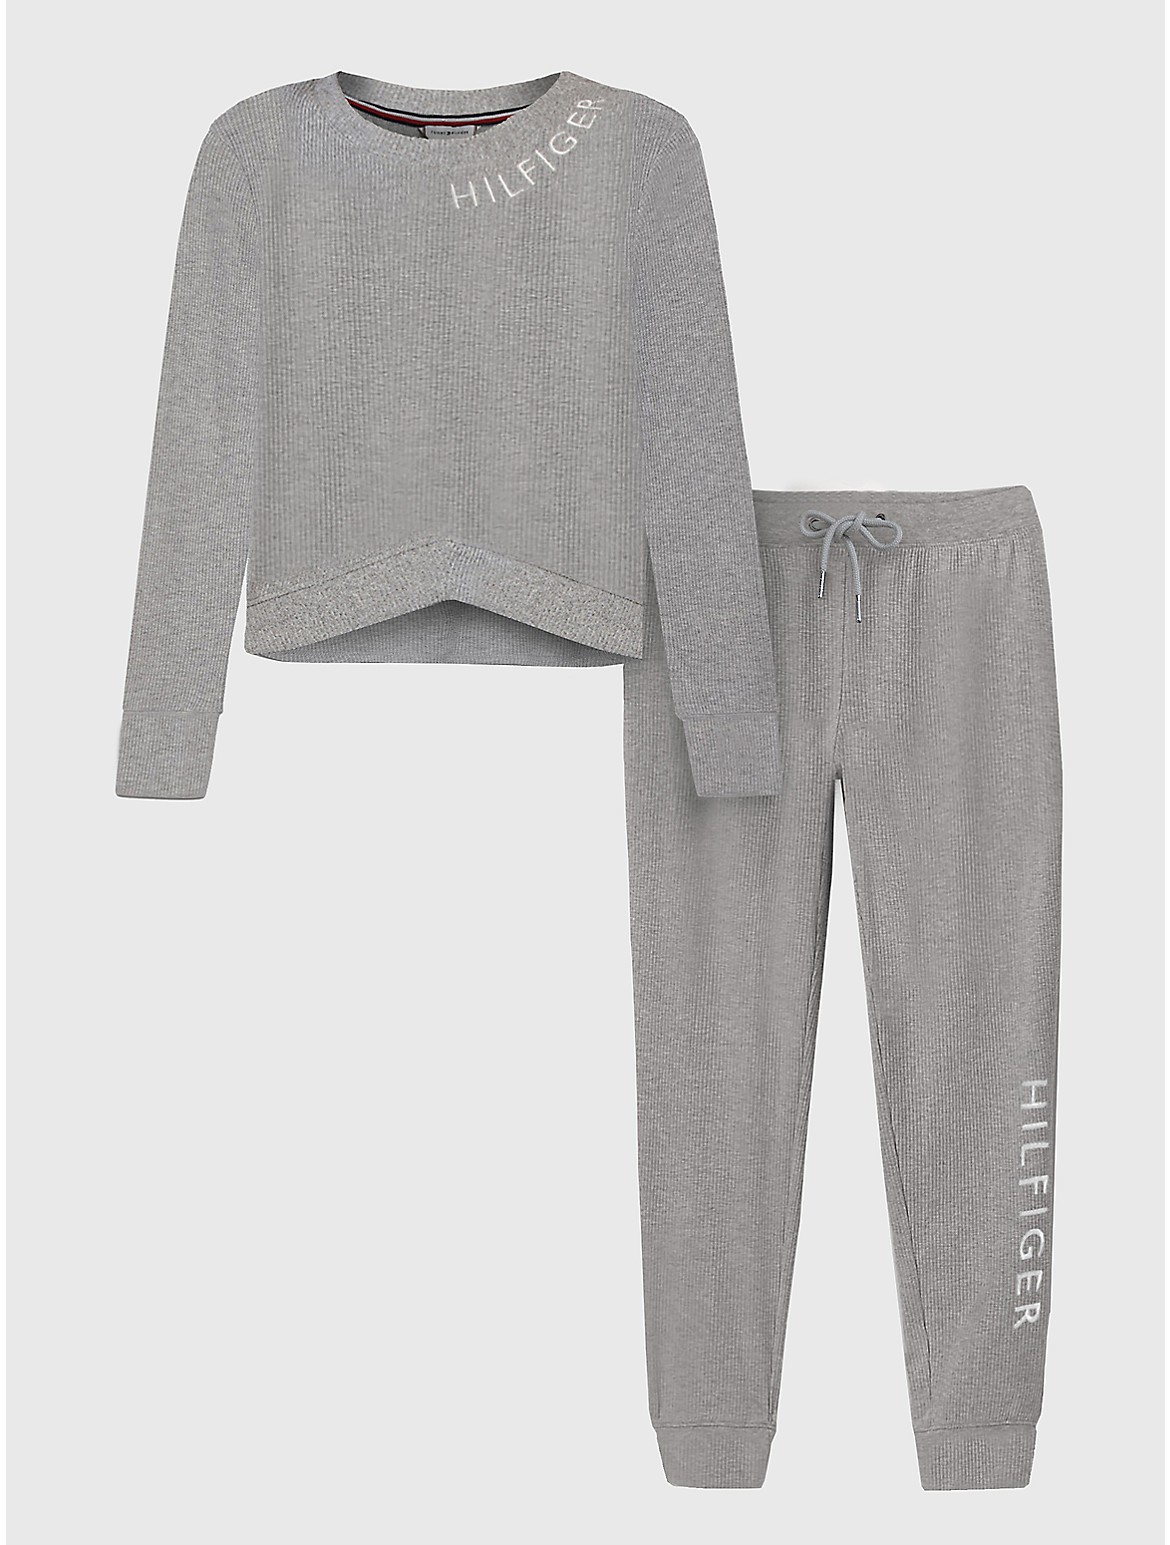 Tommy Hilfiger Women's Logo Sweatshirt & Pant Sleep Set